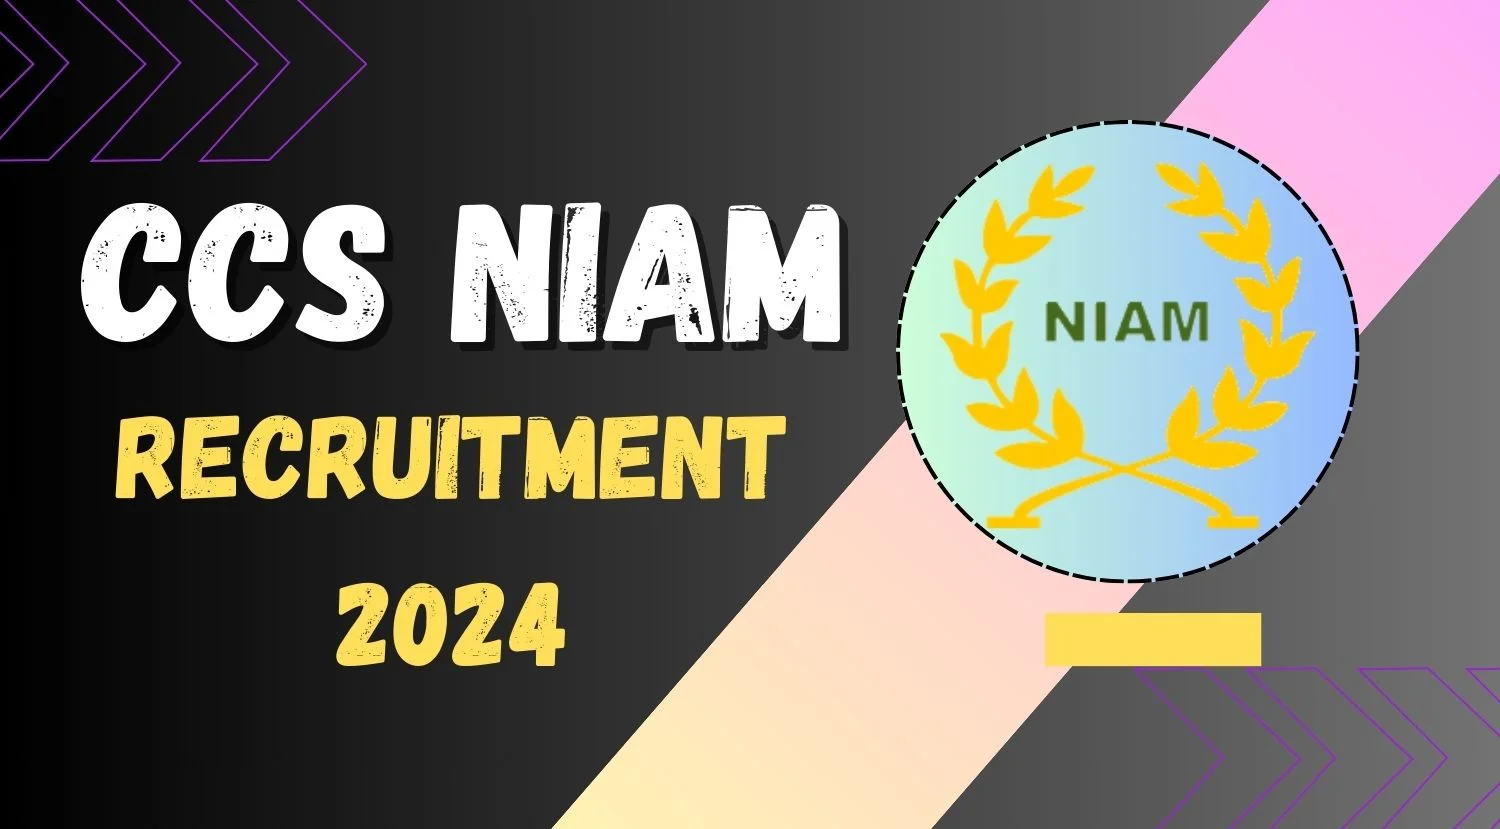 CCS NIAM Assistant Director, Accounts Officer DR, Asst. Grade I, Deputation Legal Executive Recruitment 2024